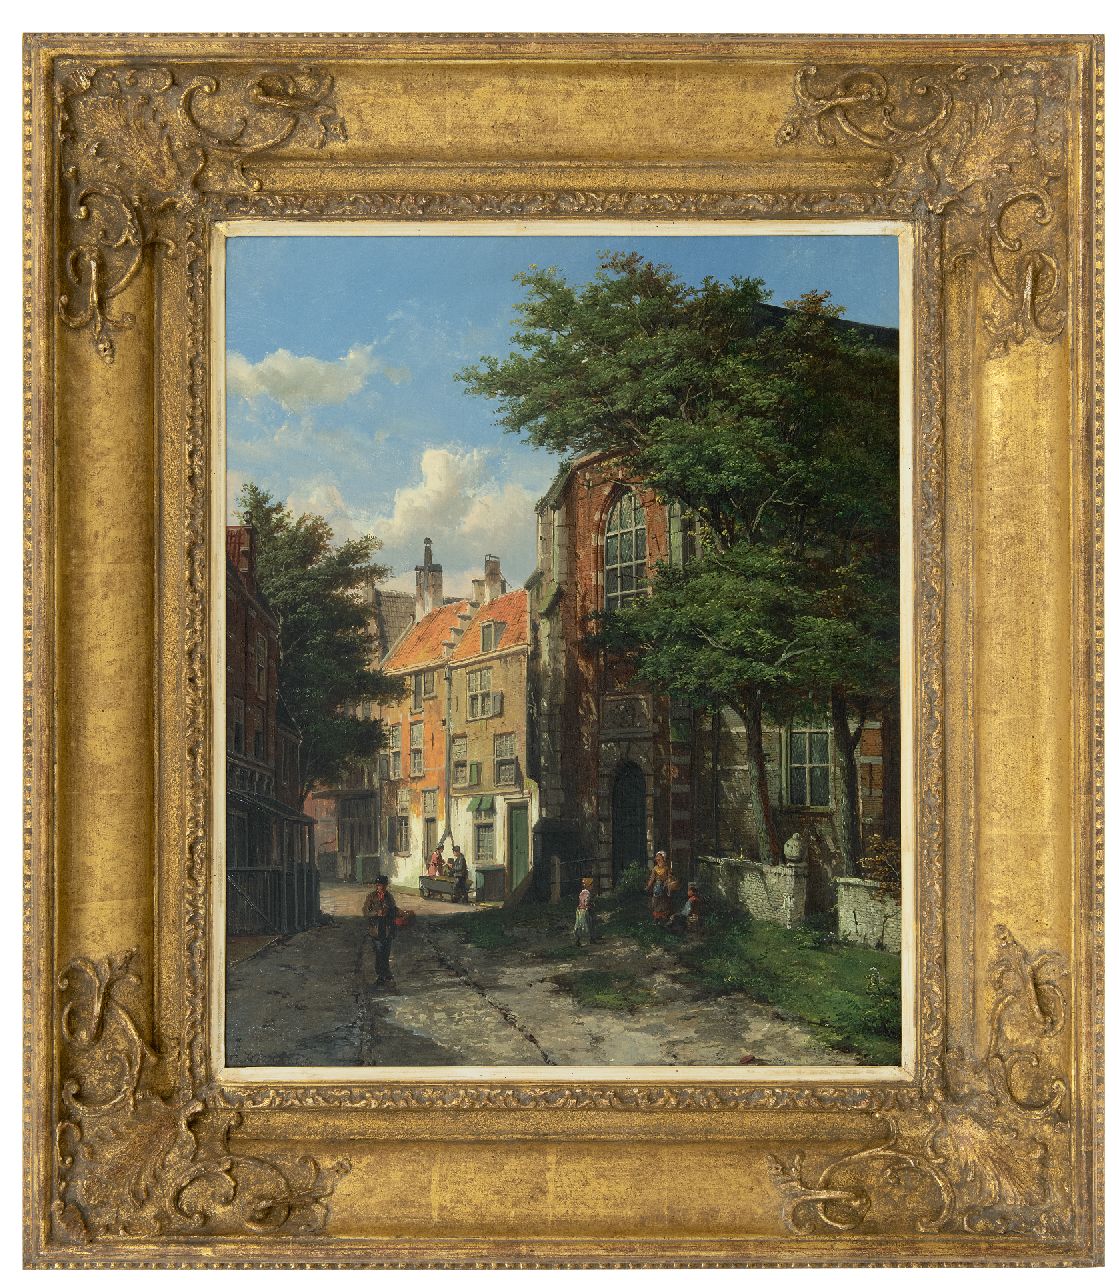 Koekkoek W.  | Willem Koekkoek, Sunny street ibehind the church (Asperen), oil on canvas 56.5 x 46.2 cm, signed l.l.